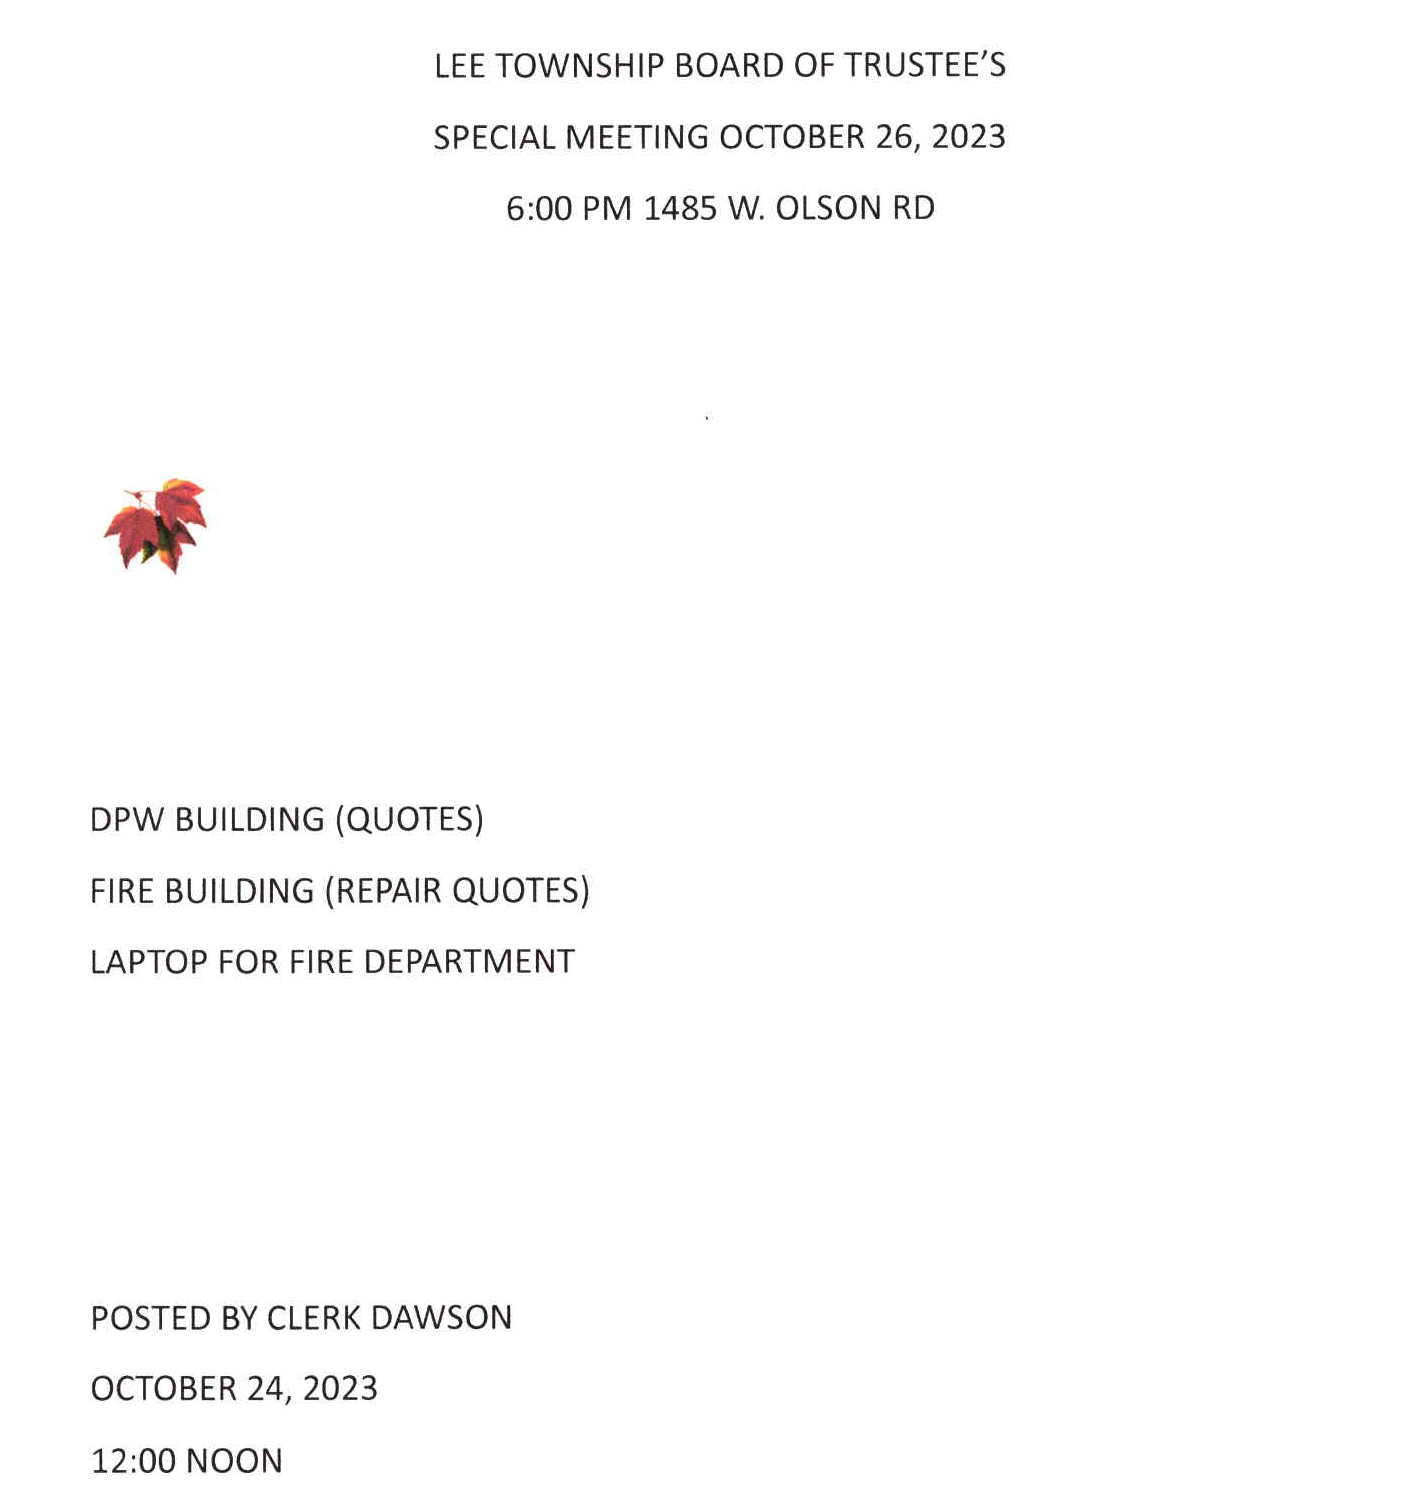 Special Meeting Notice October 26